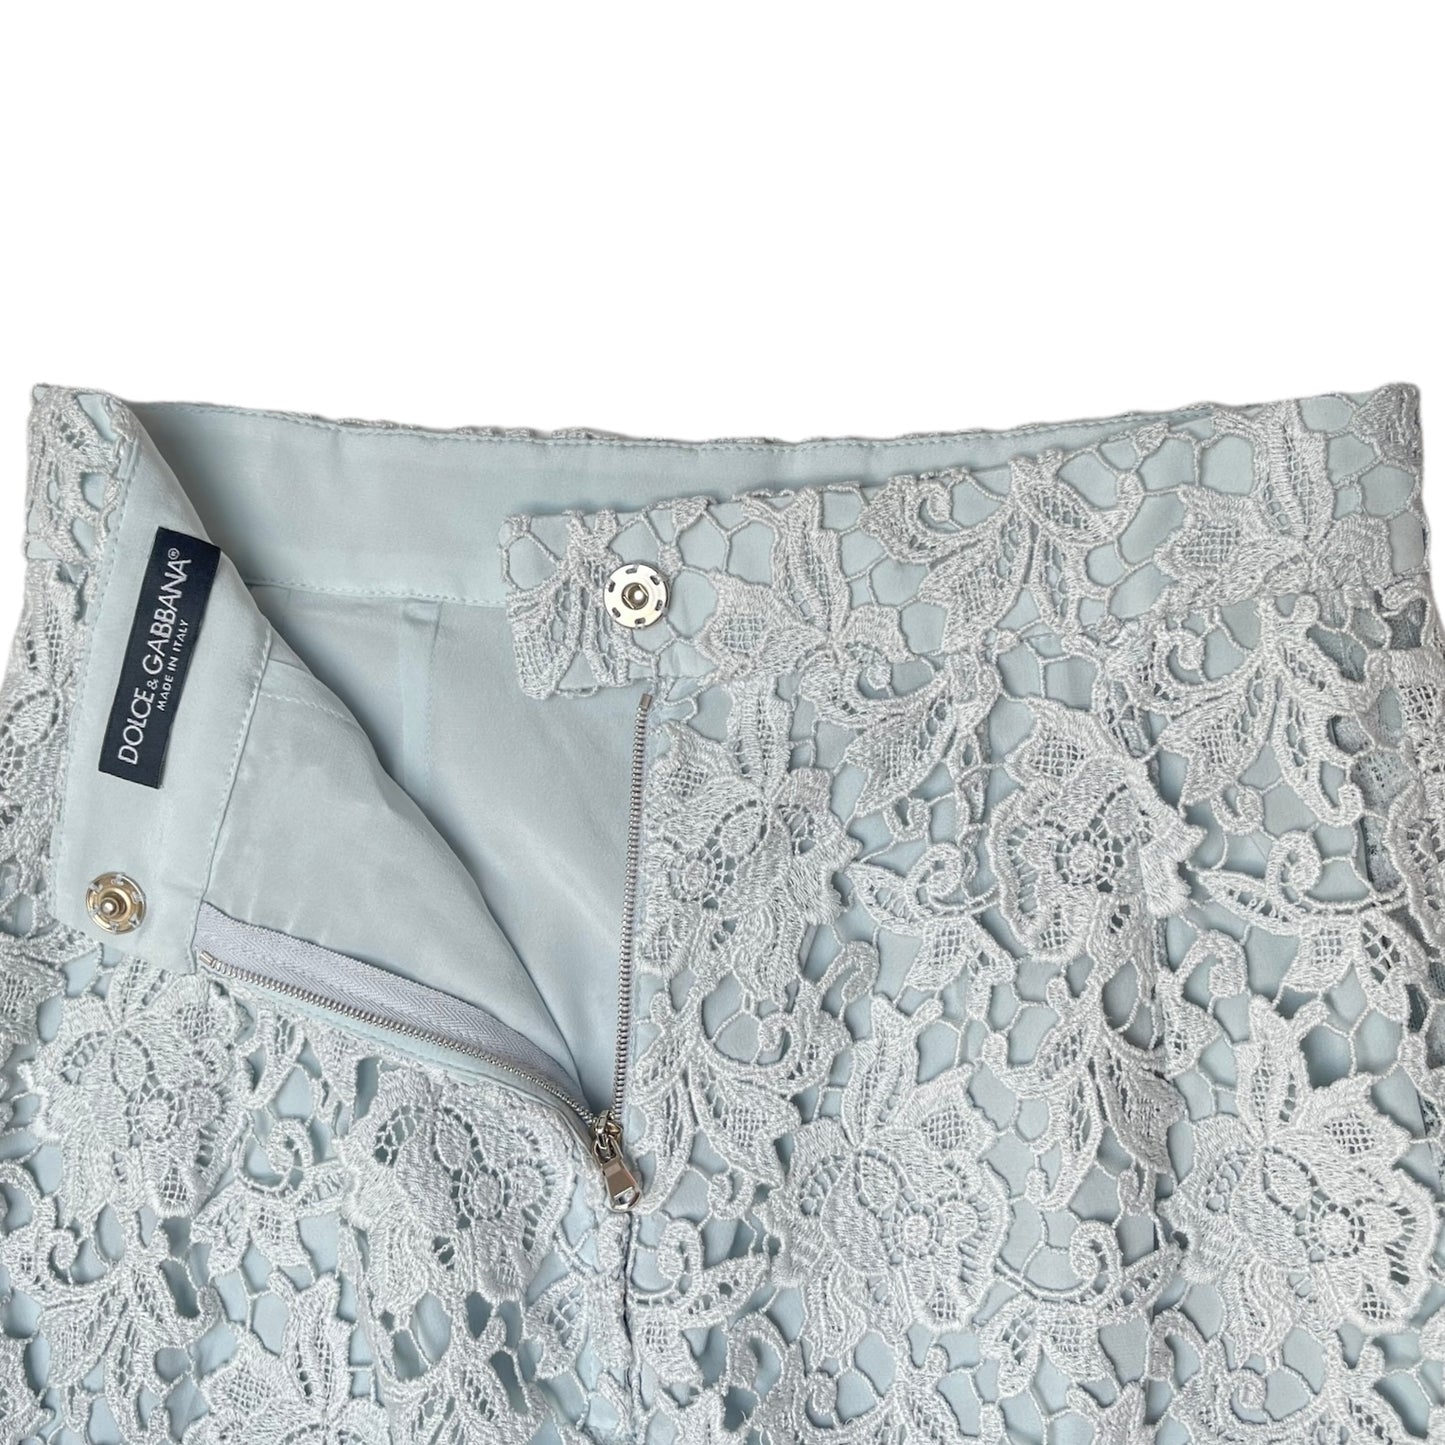 Dolce & Gabbana Blue Lace Skirt - S